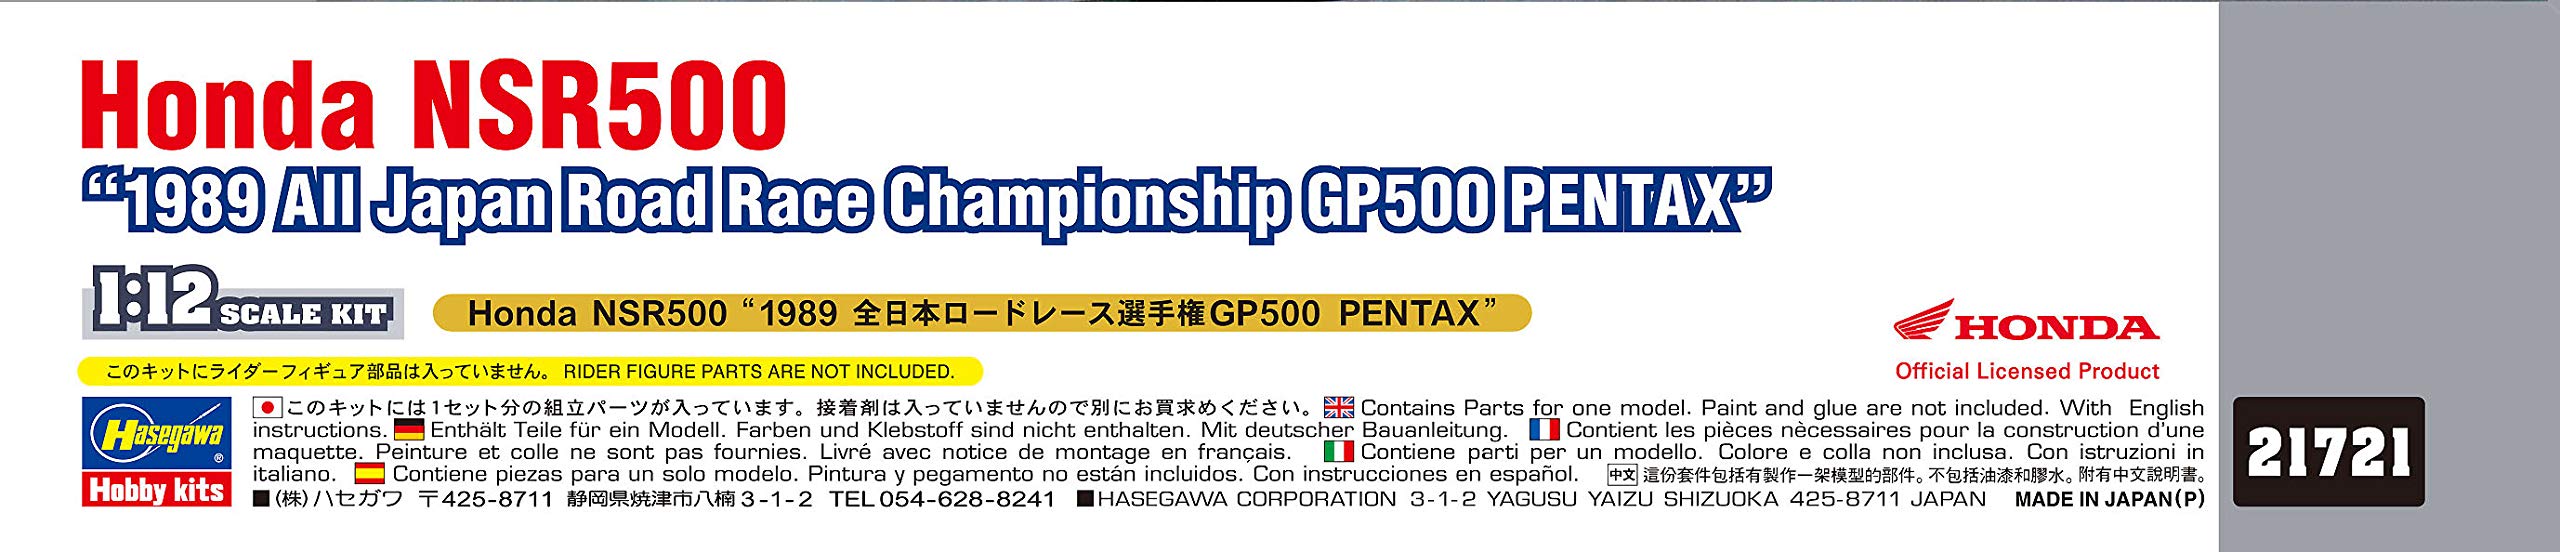 HASEGAWA 21721 Honda NSR500 1989 Japan Road Race Championship Gp500 Pentax Bausatz im Maßstab 1:12